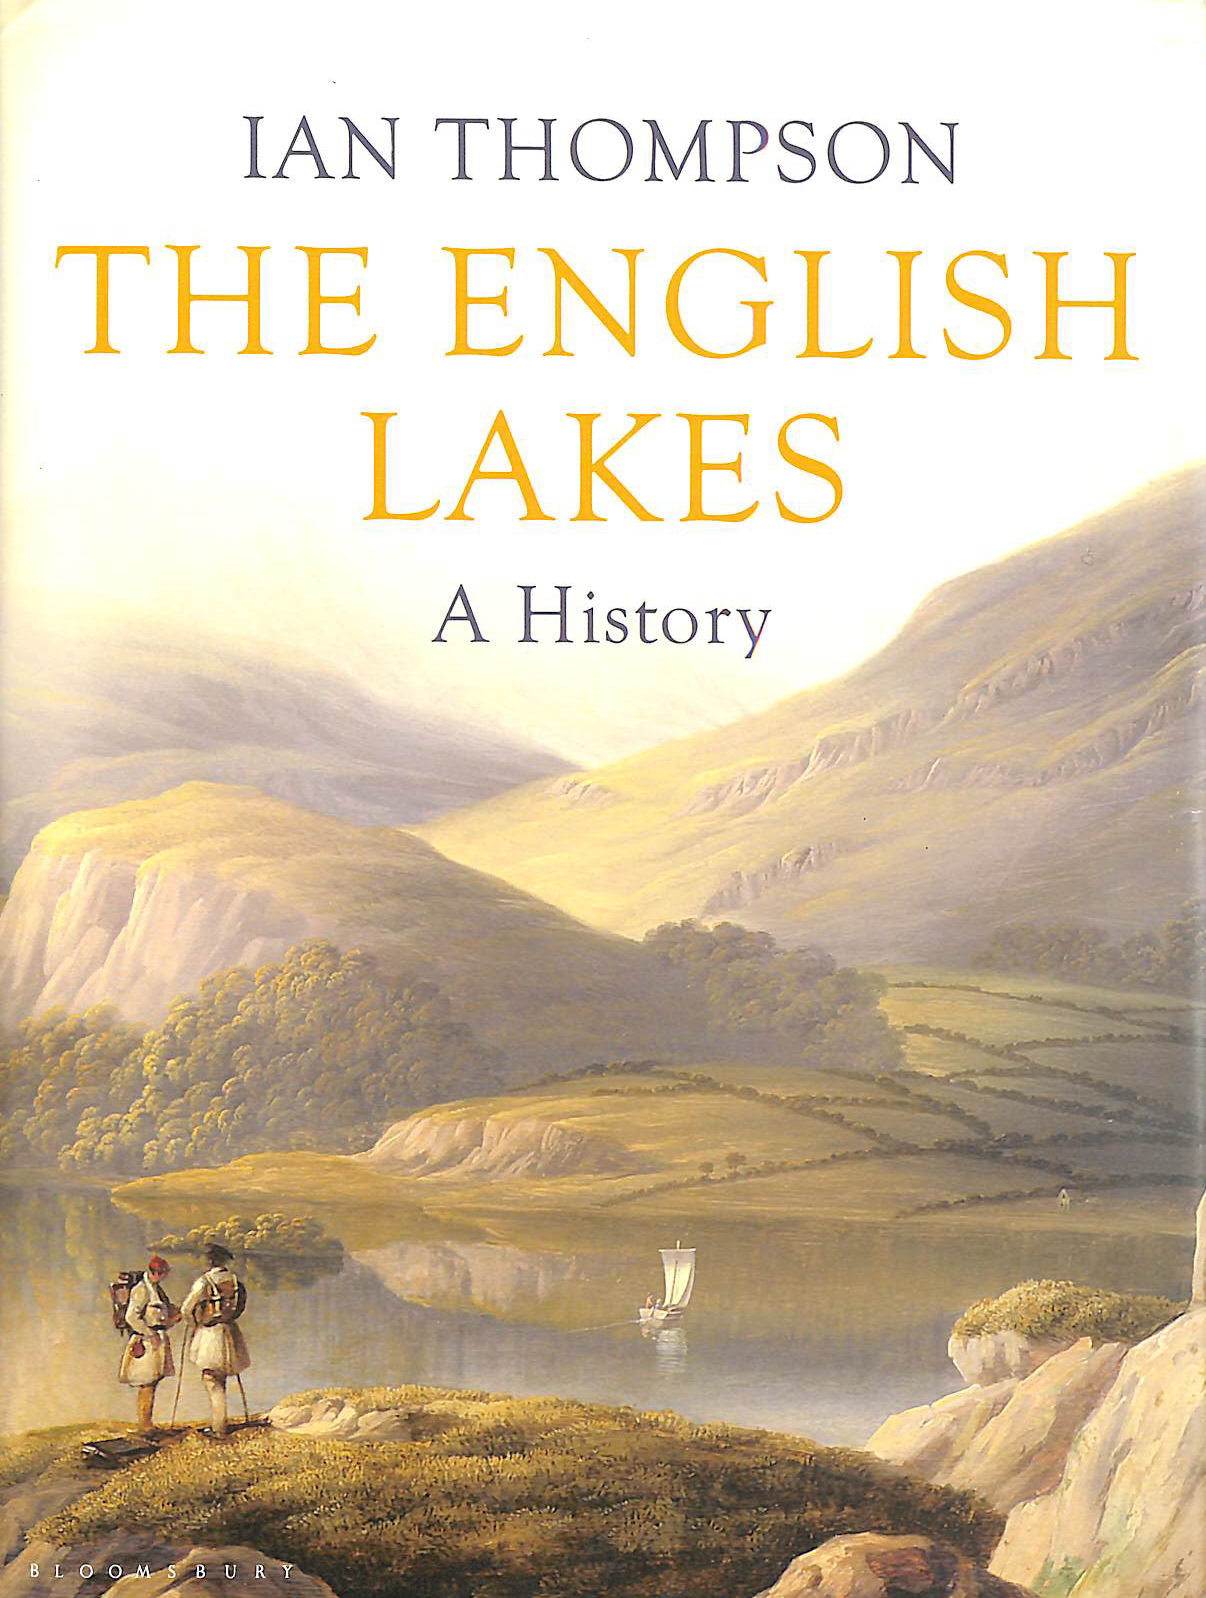 THOMPSON, IAN - The English Lakes: A History